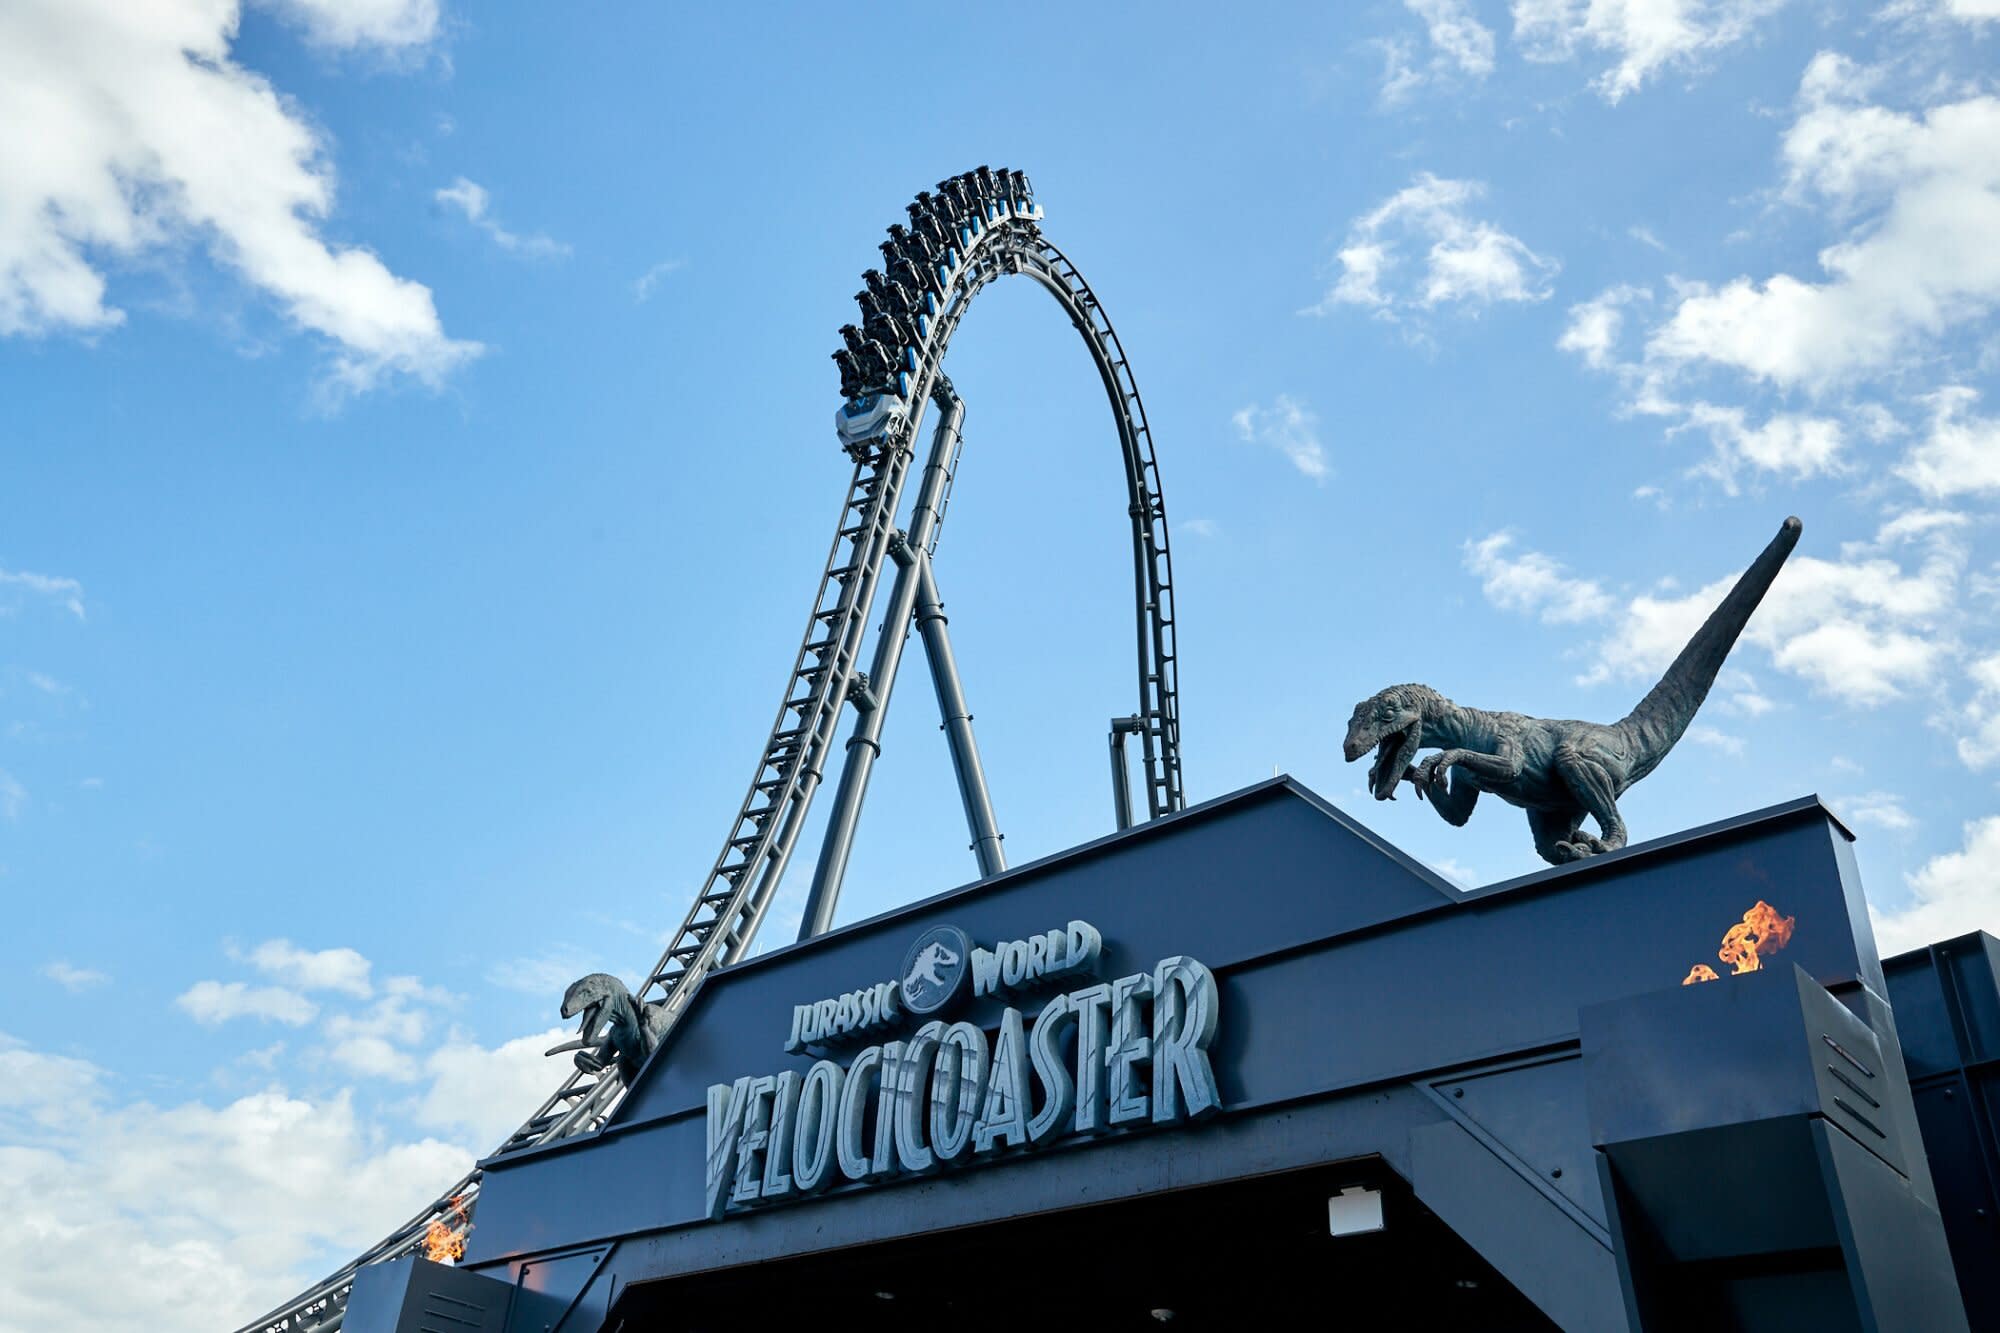 Jurassic World Velocicoaster Opening This Summer At Universal Orlando - water park world roblox speed build